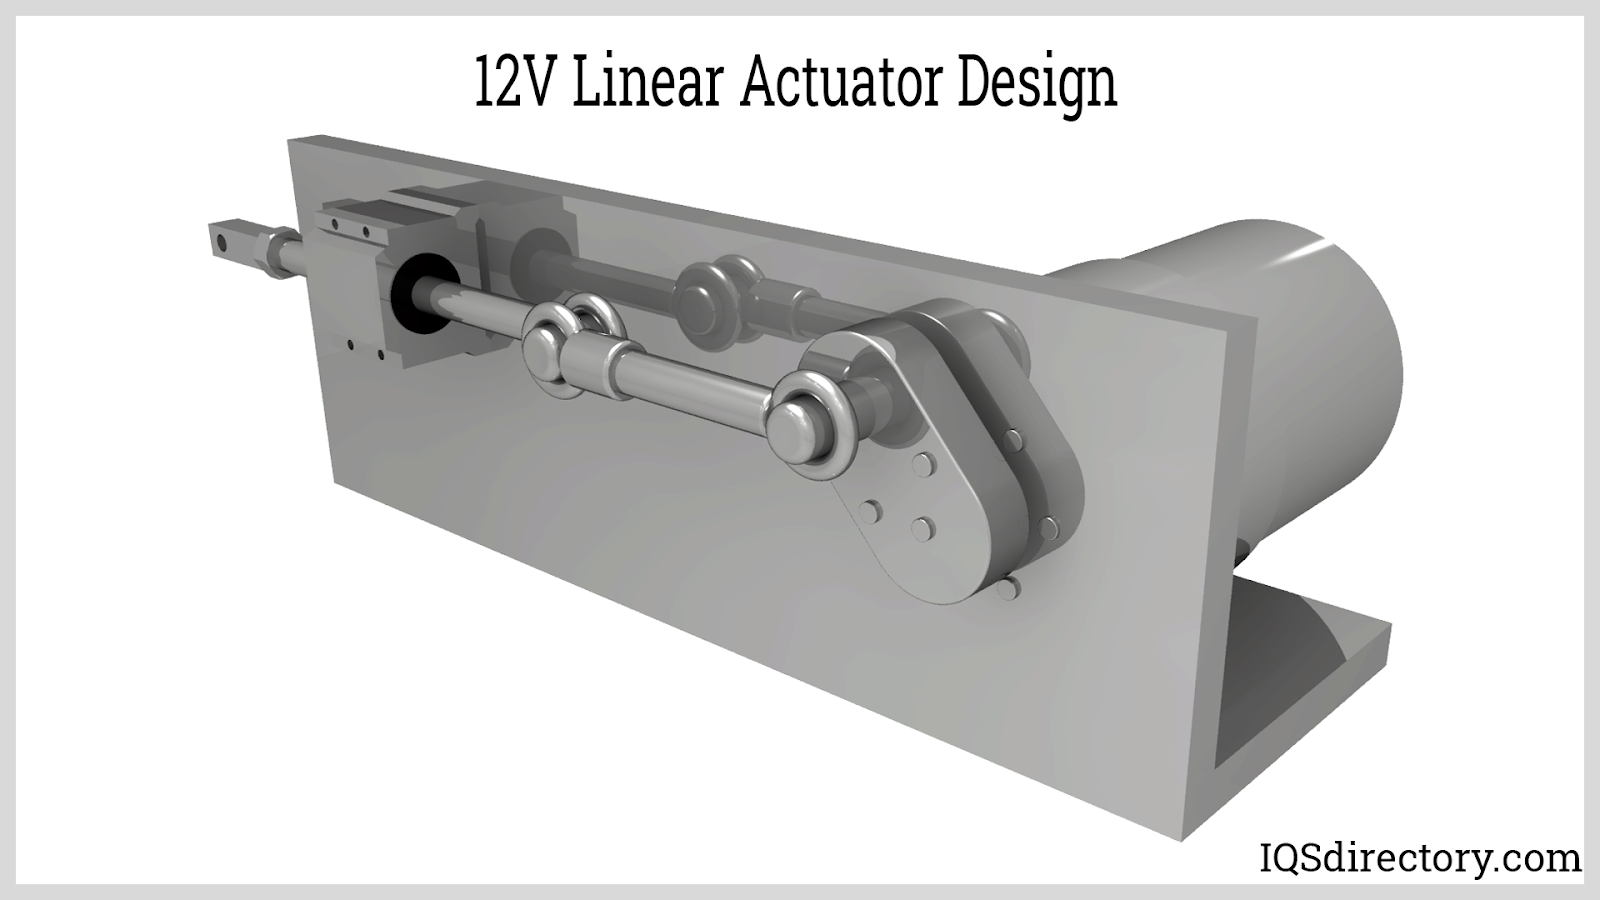 12V Linear Actuator Design